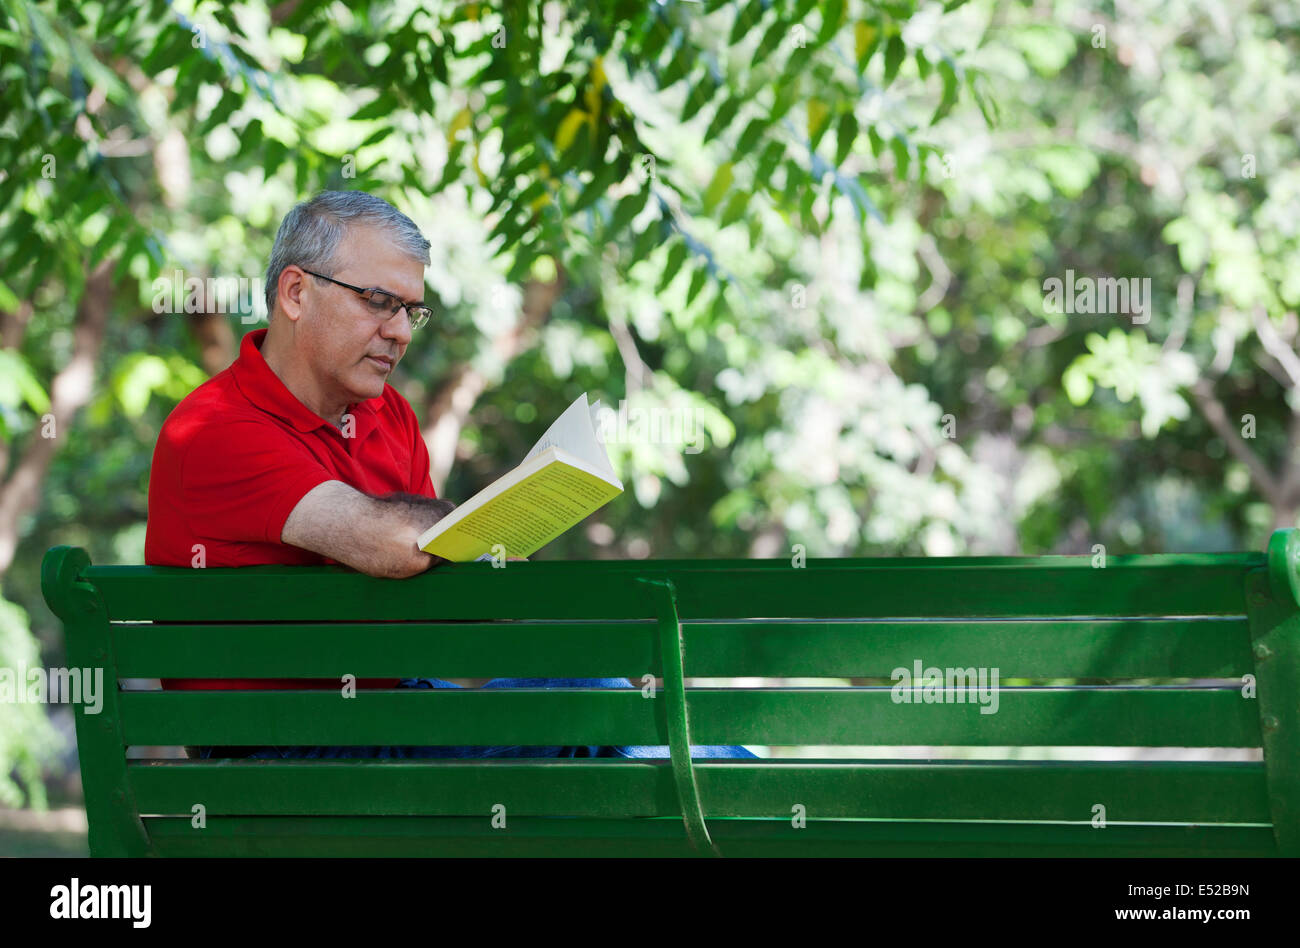 Senior man reading a book in a park Stock Photo